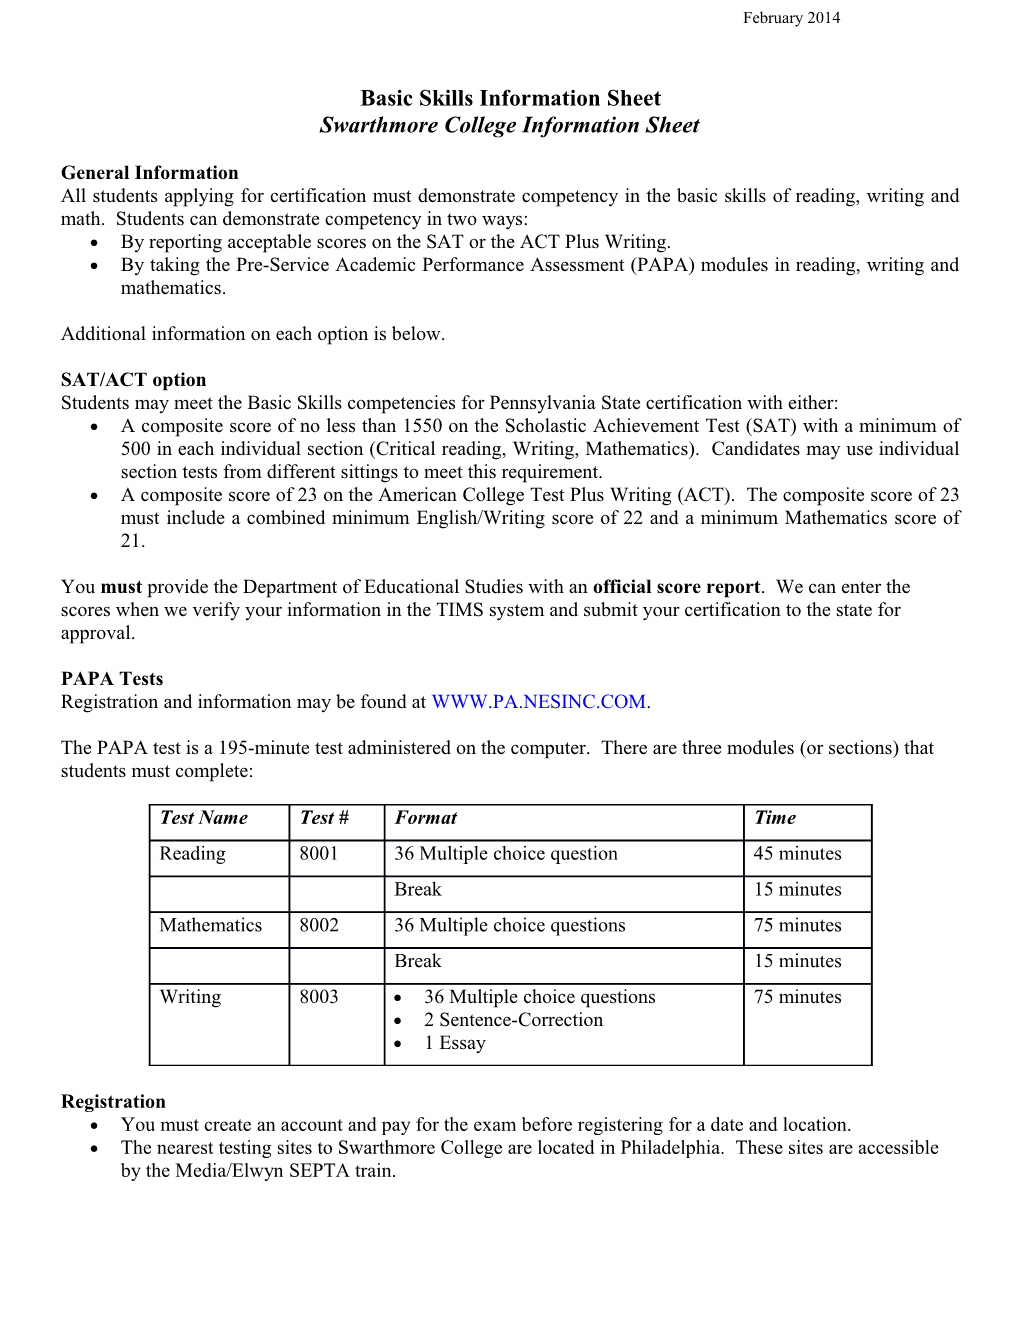 Basic Skills Information Sheet